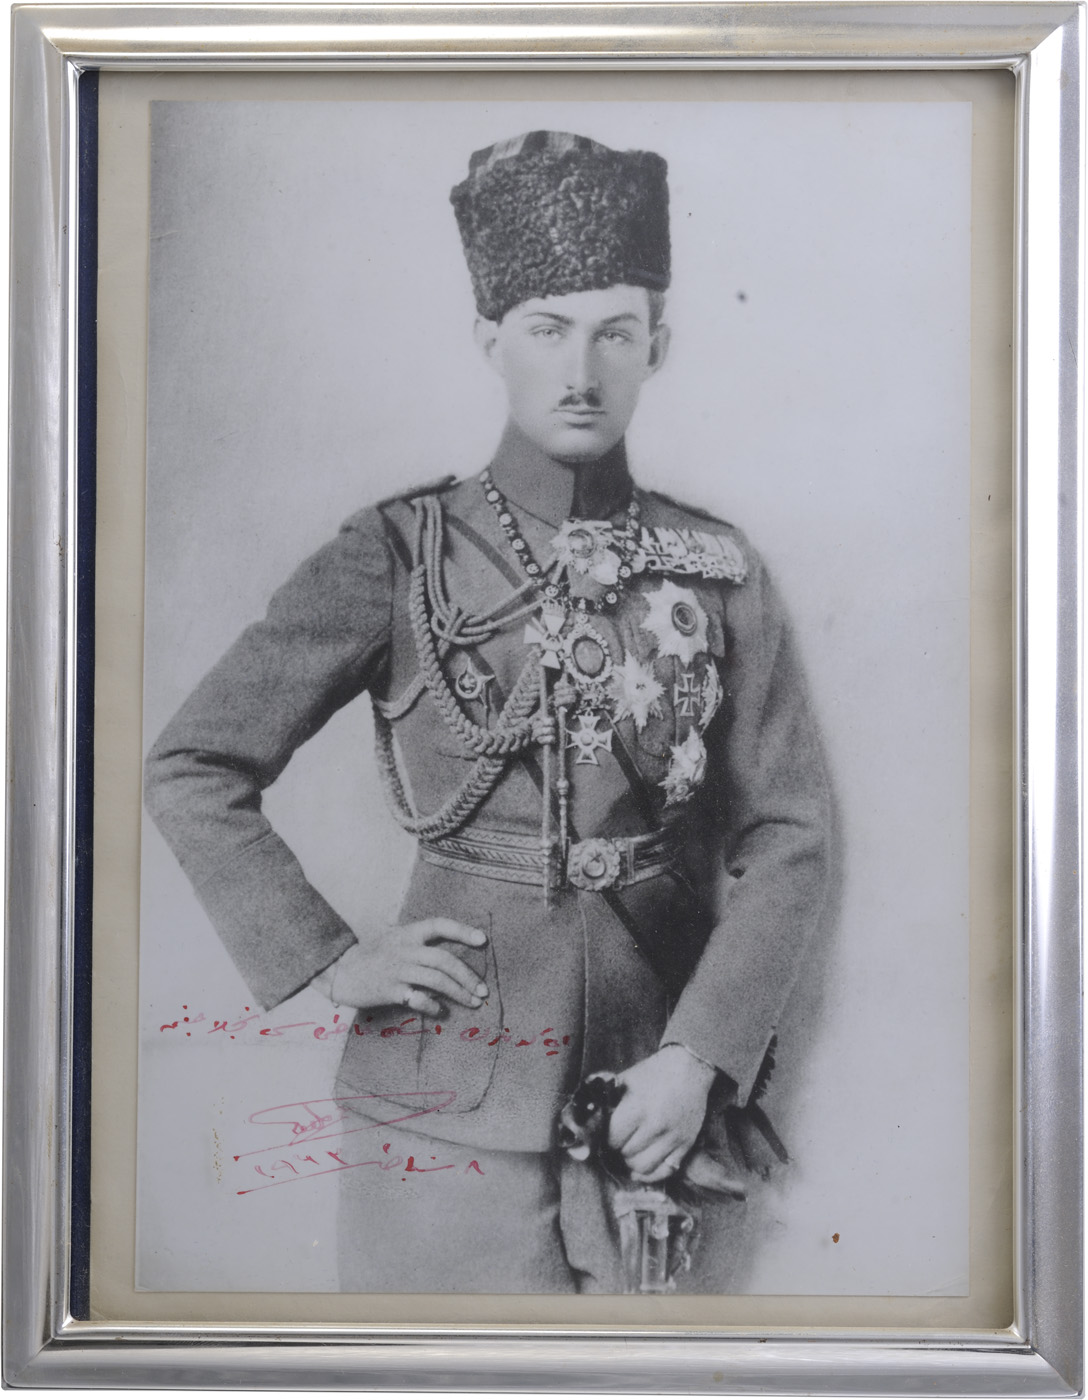 A "Cabinet" photo portrait of Prince Åžehzade Ã–mer Faruk